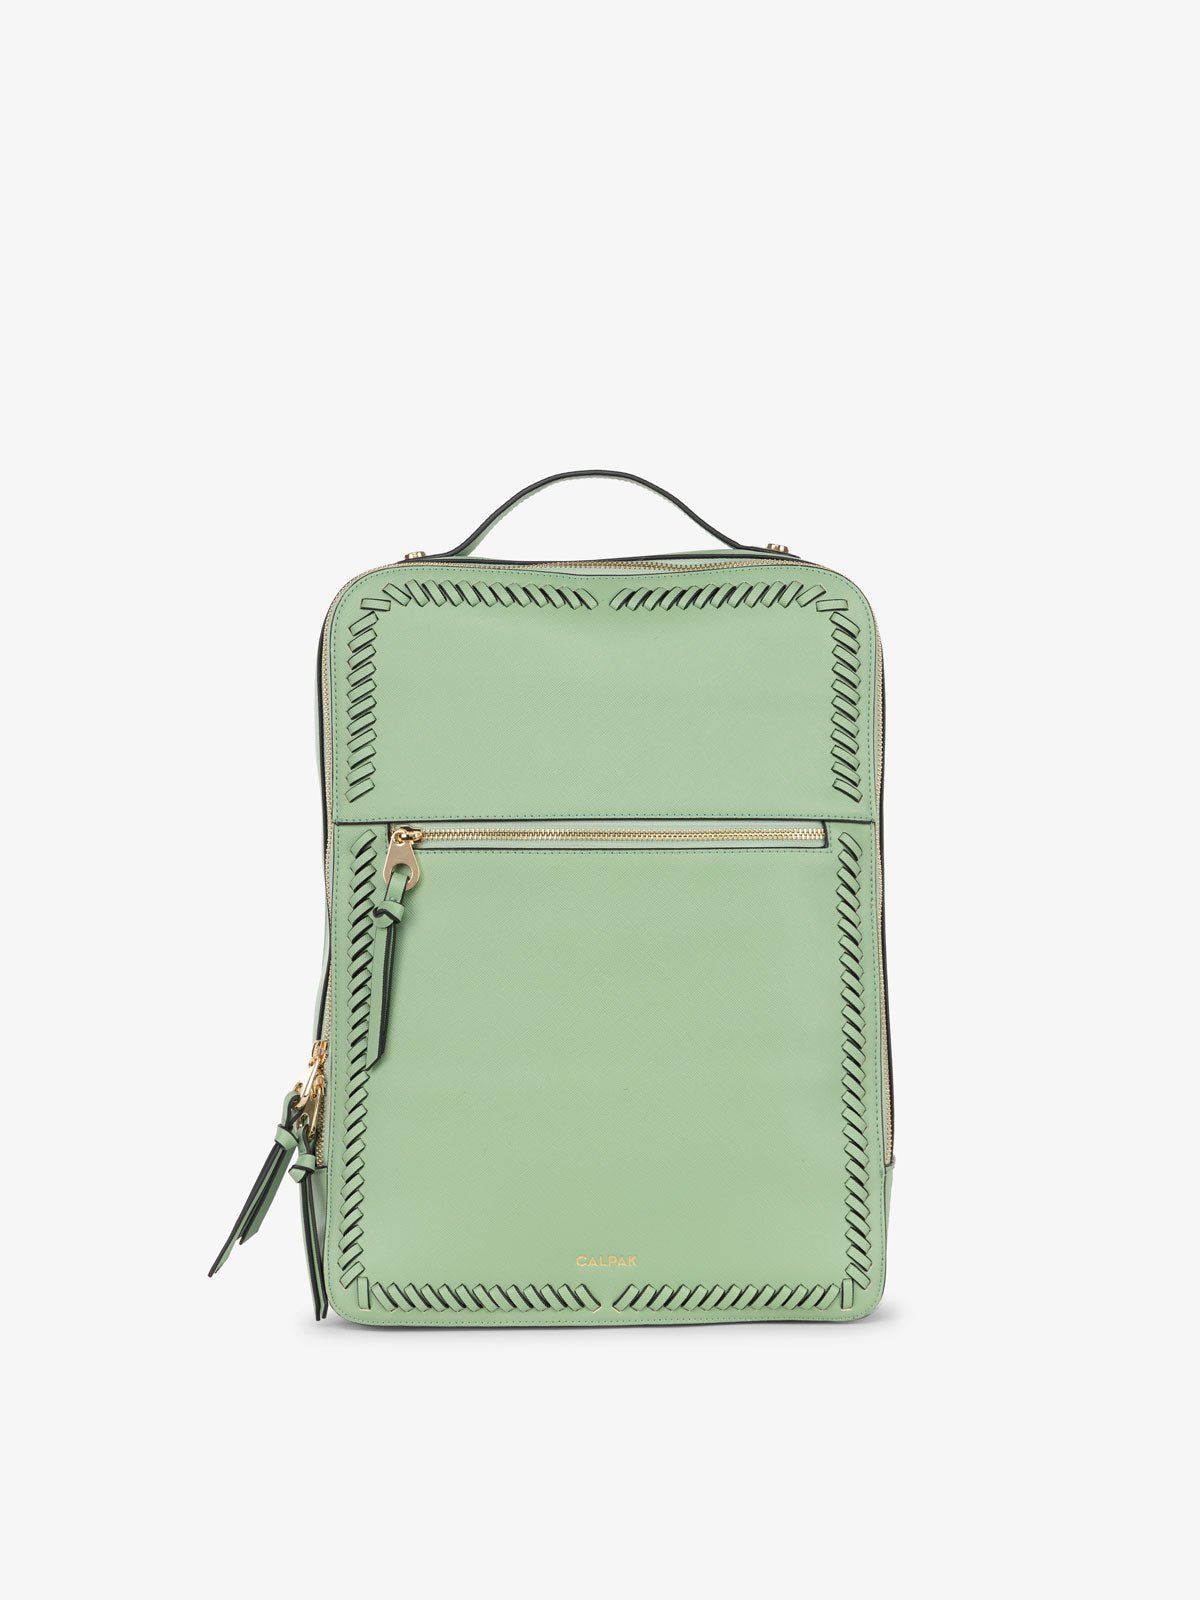 CALPAK Kaya laptop backpack in green honeydew